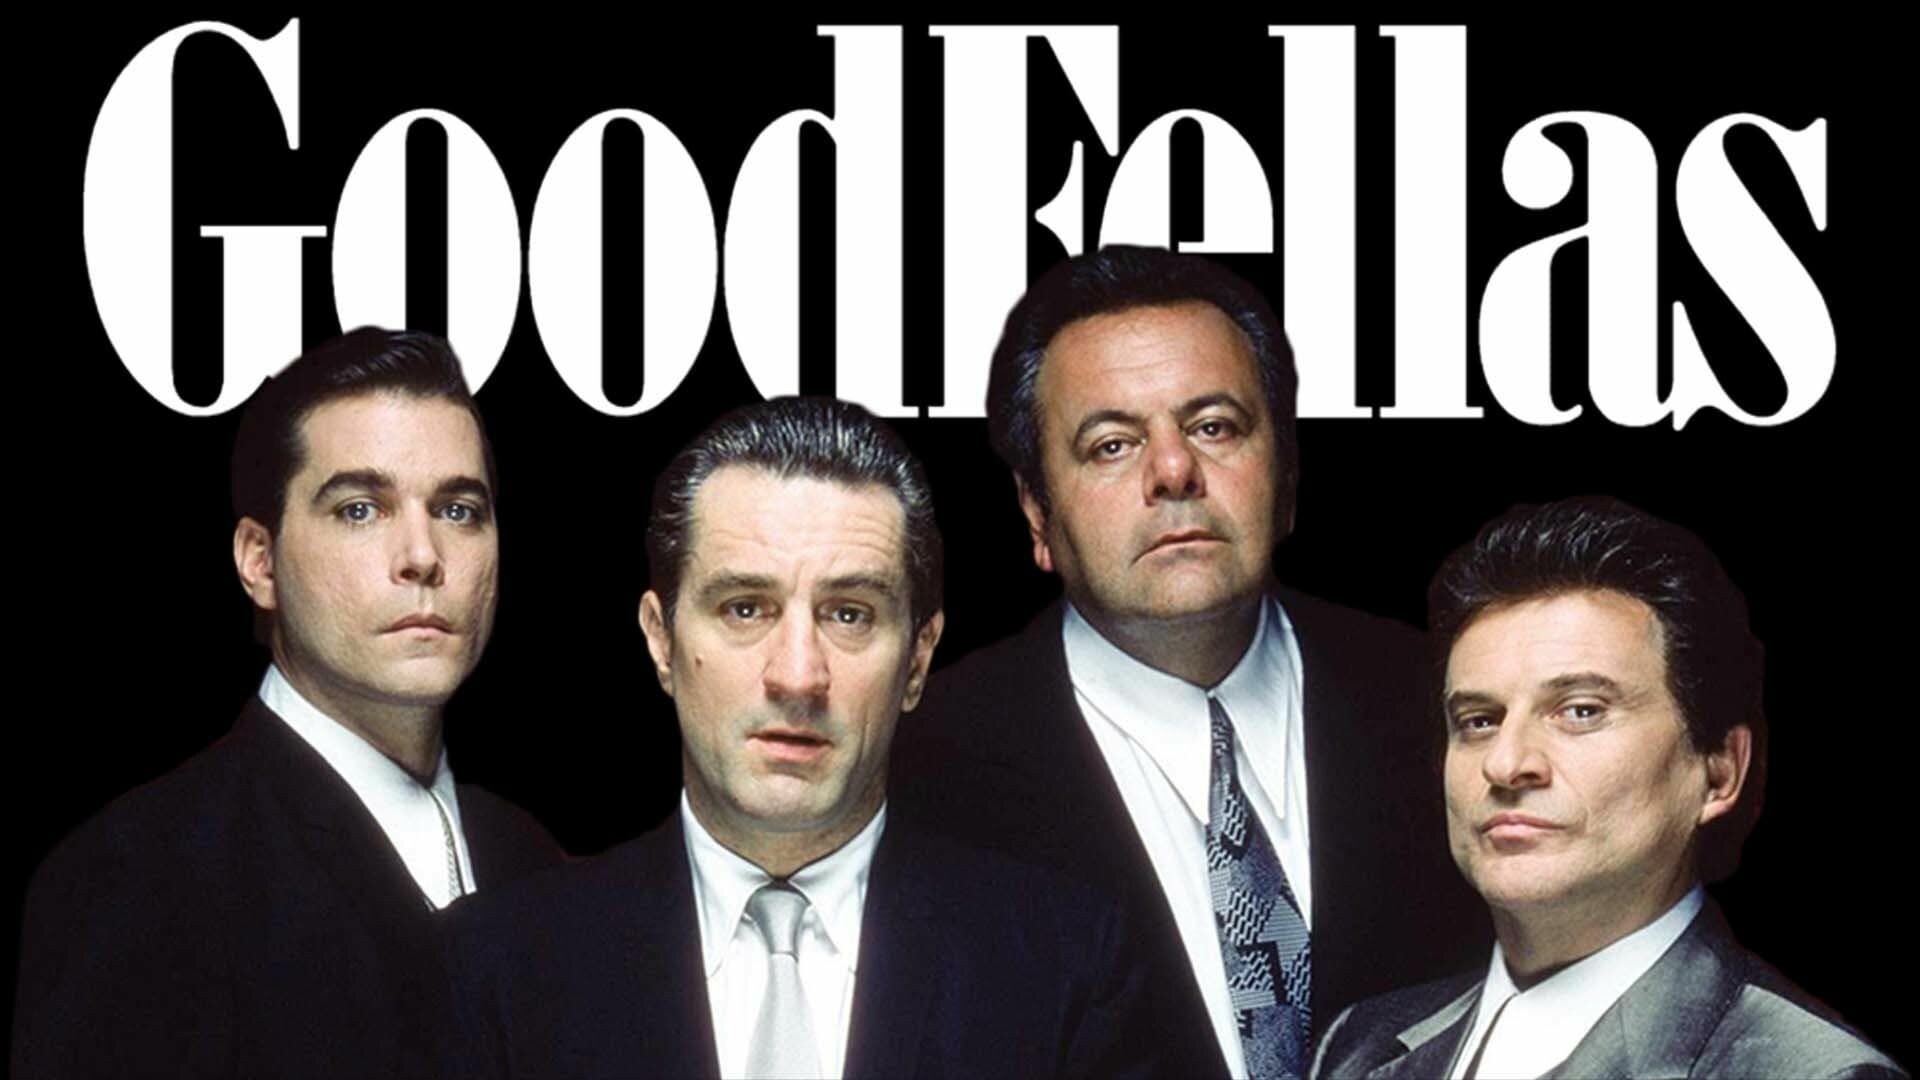 Goodfellas: Script by Nicholas Pileggi, Robert De Niro, Ray Liotta, Joe Pesci, Paul Sorvino. 1920x1080 Full HD Wallpaper.